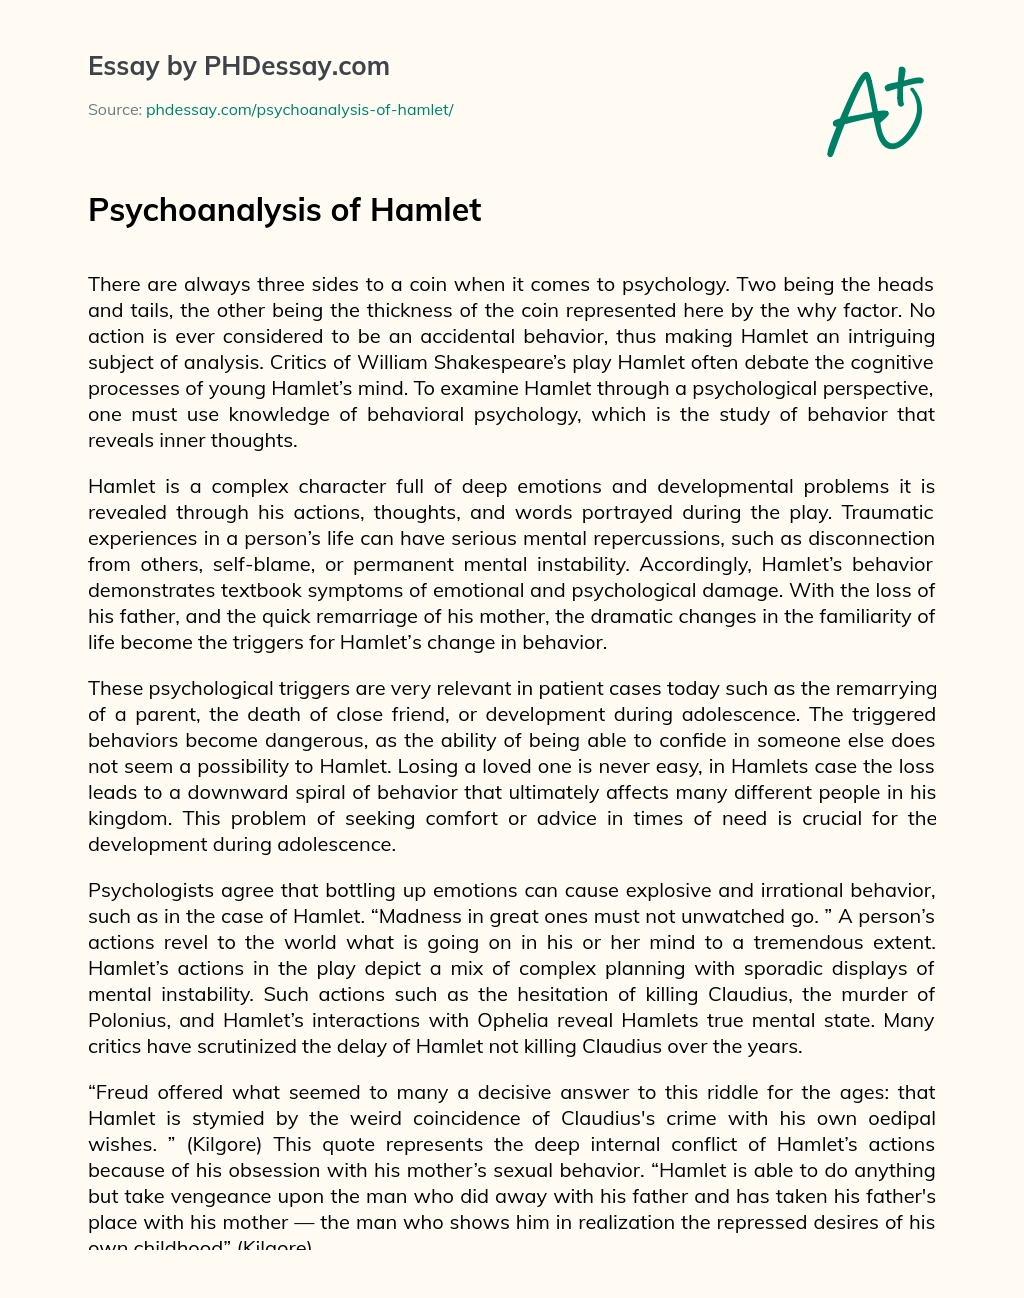 Psychoanalysis of Hamlet essay